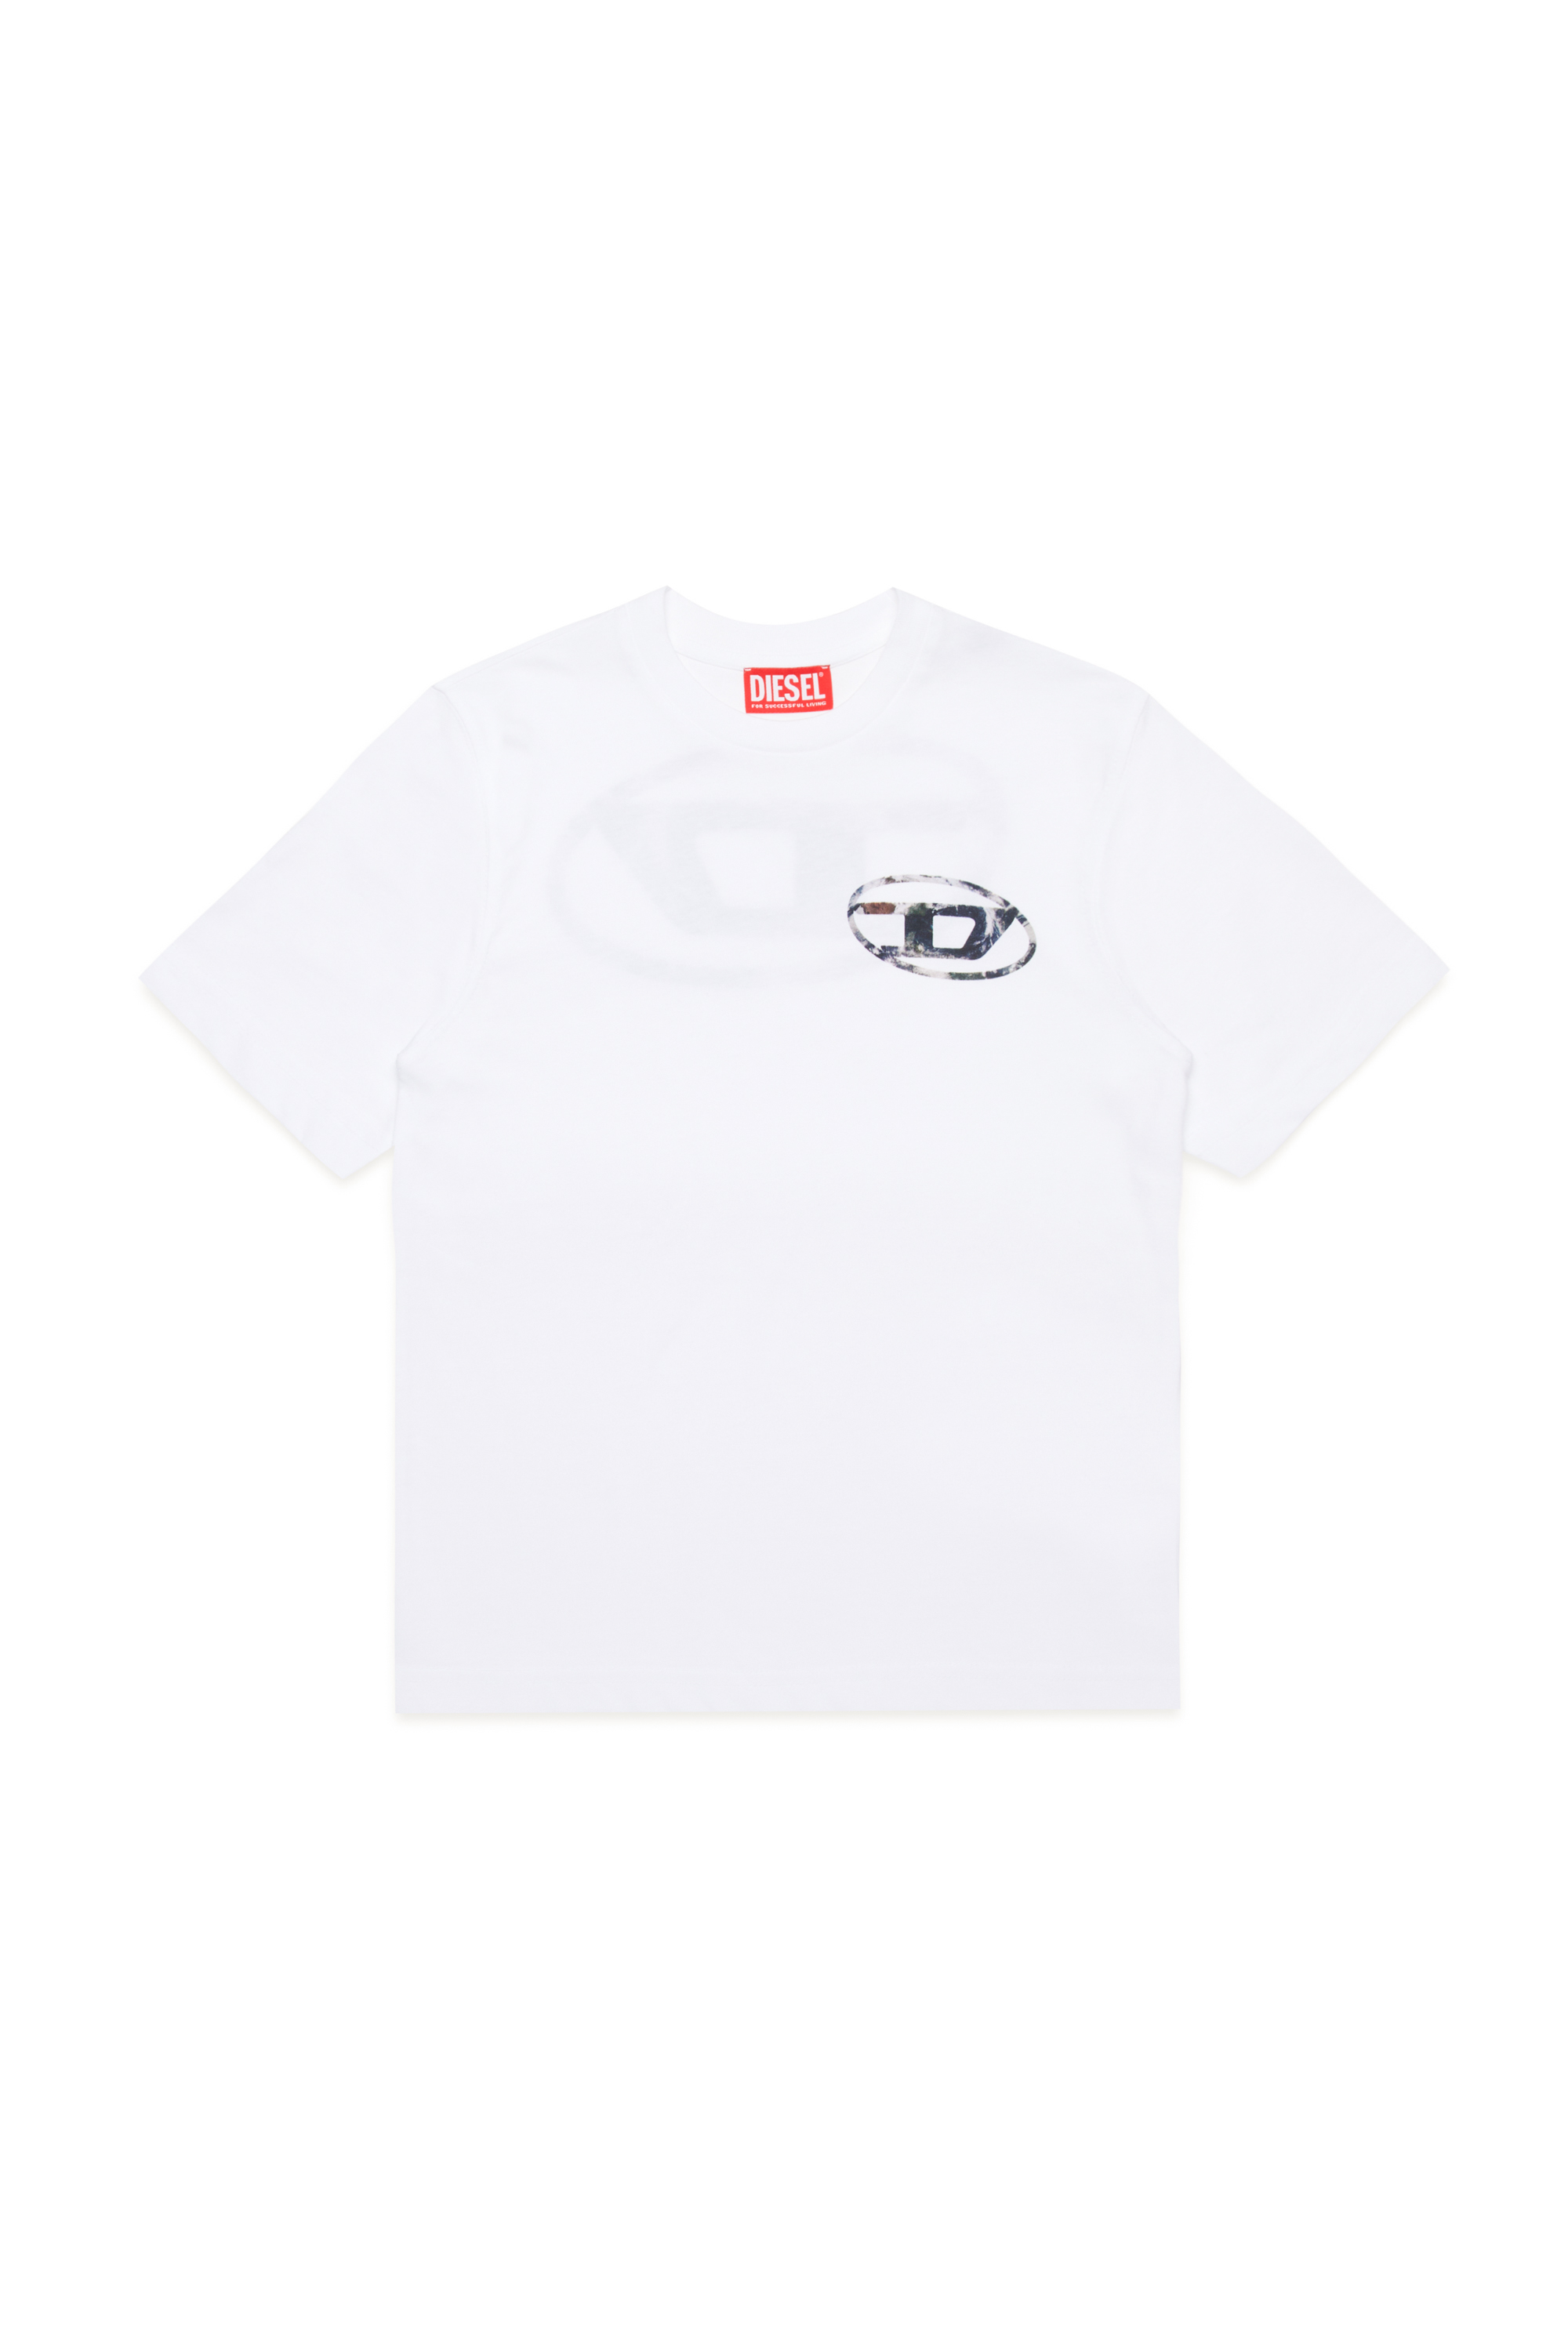 Diesel - TWASHL6 OVER, Homme T-shirt avec logo Oval D effet marbré in Blanc - Image 1